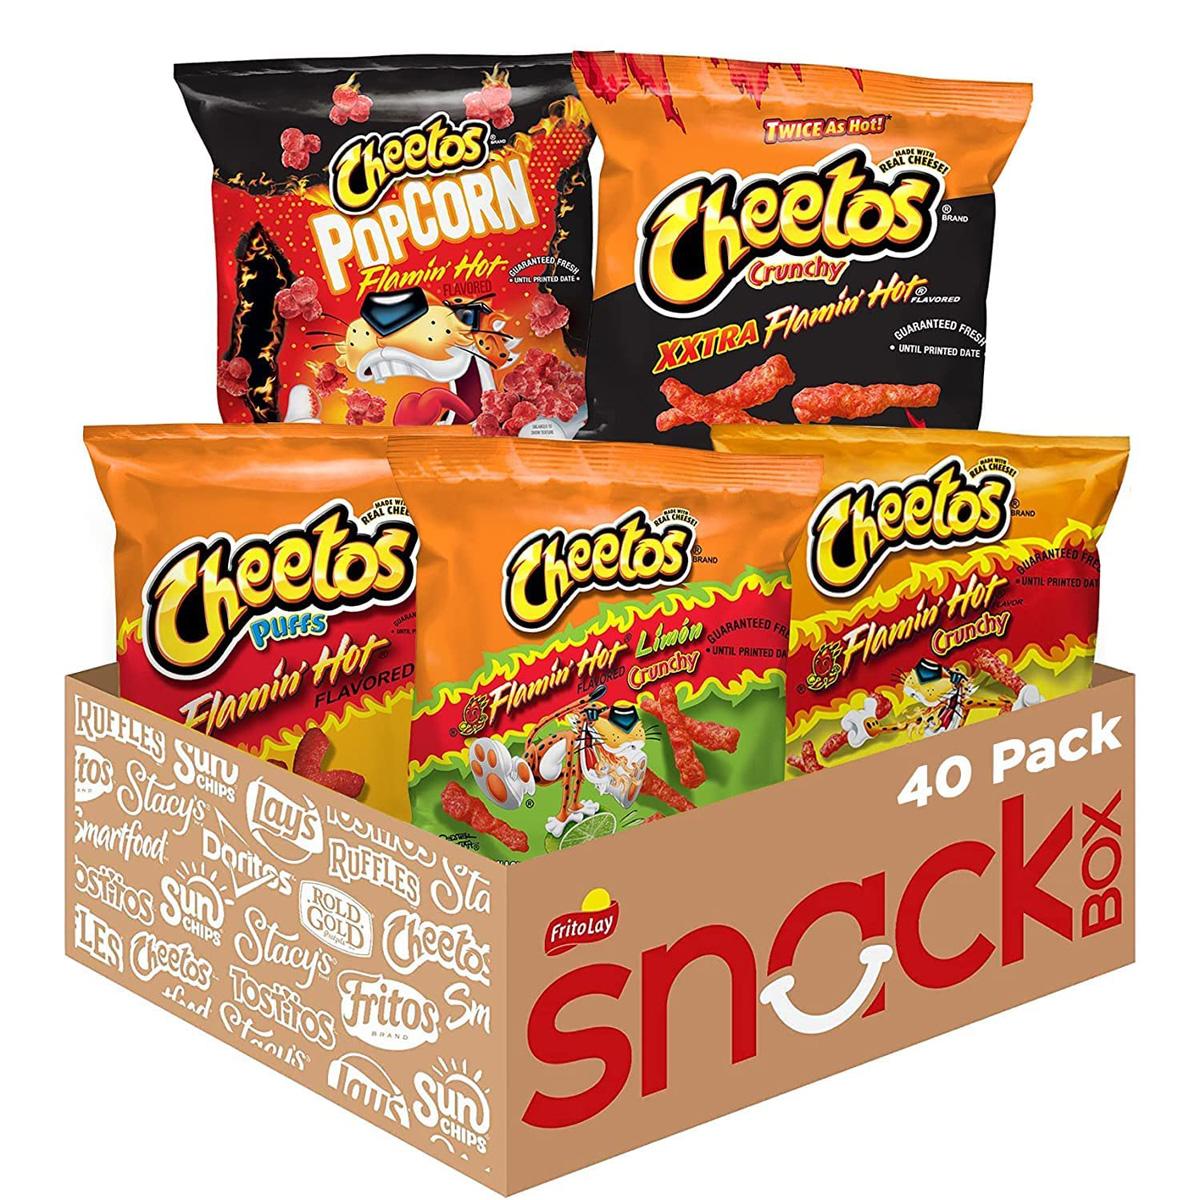 Cheetos Flamin Hot Variety 40 Pack for $14.52 Shipped